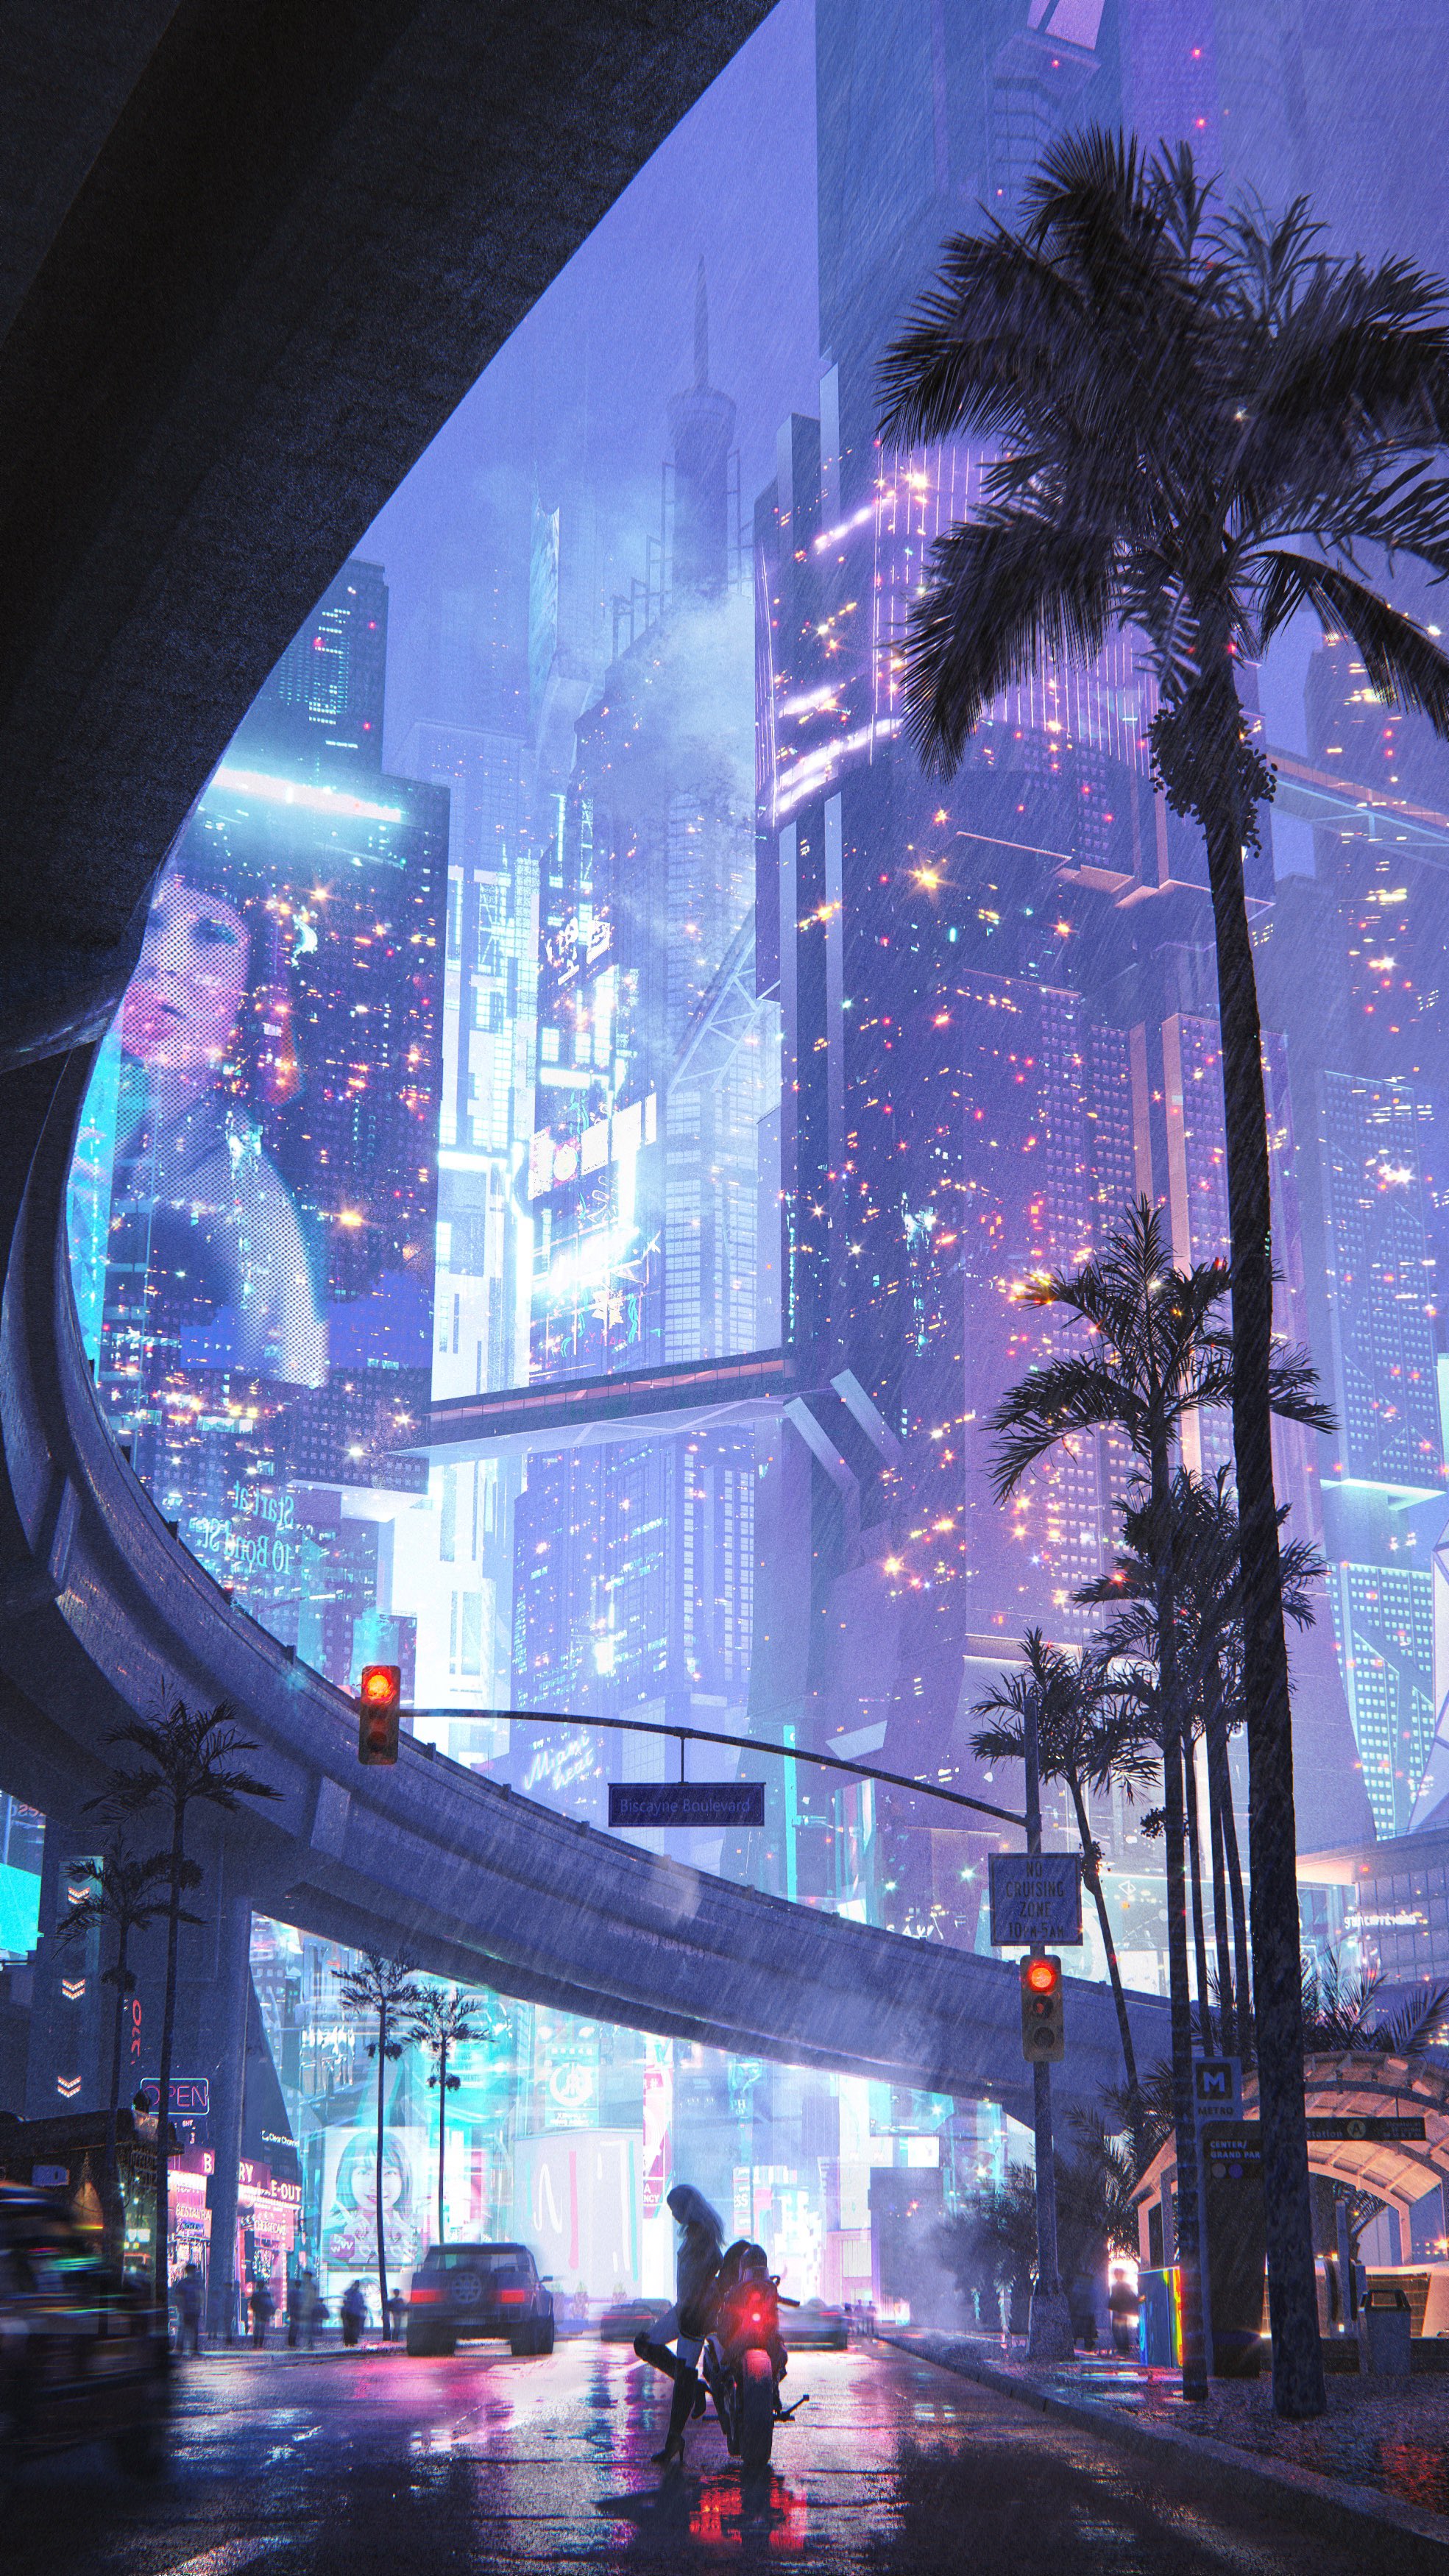 City Cyberpunk Science Fiction Neon Artwork Night City Lights Digital Art Building Palm Trees Bridge 1969x3500